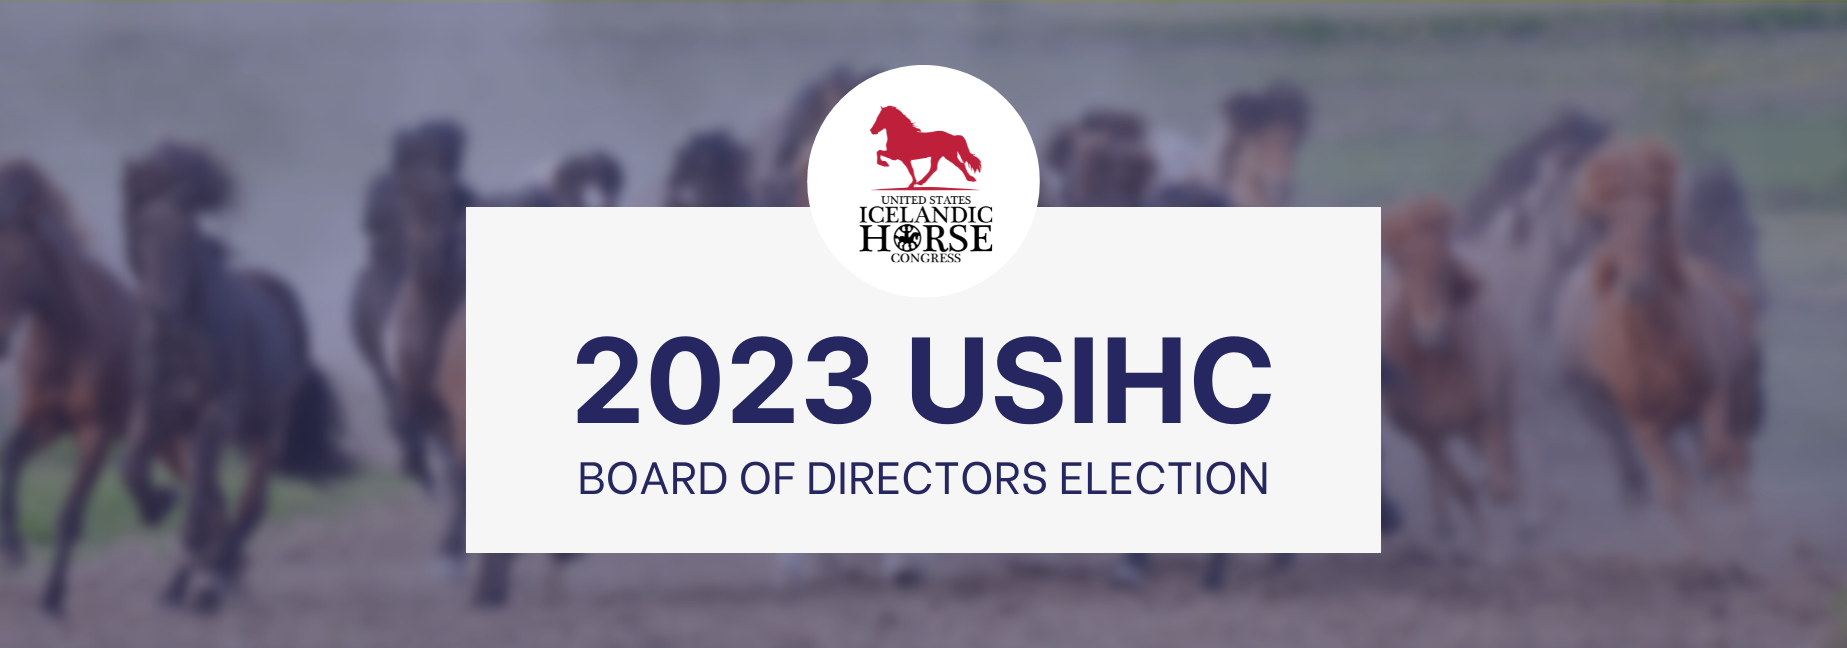 2023 USIHC Board of Directors Election